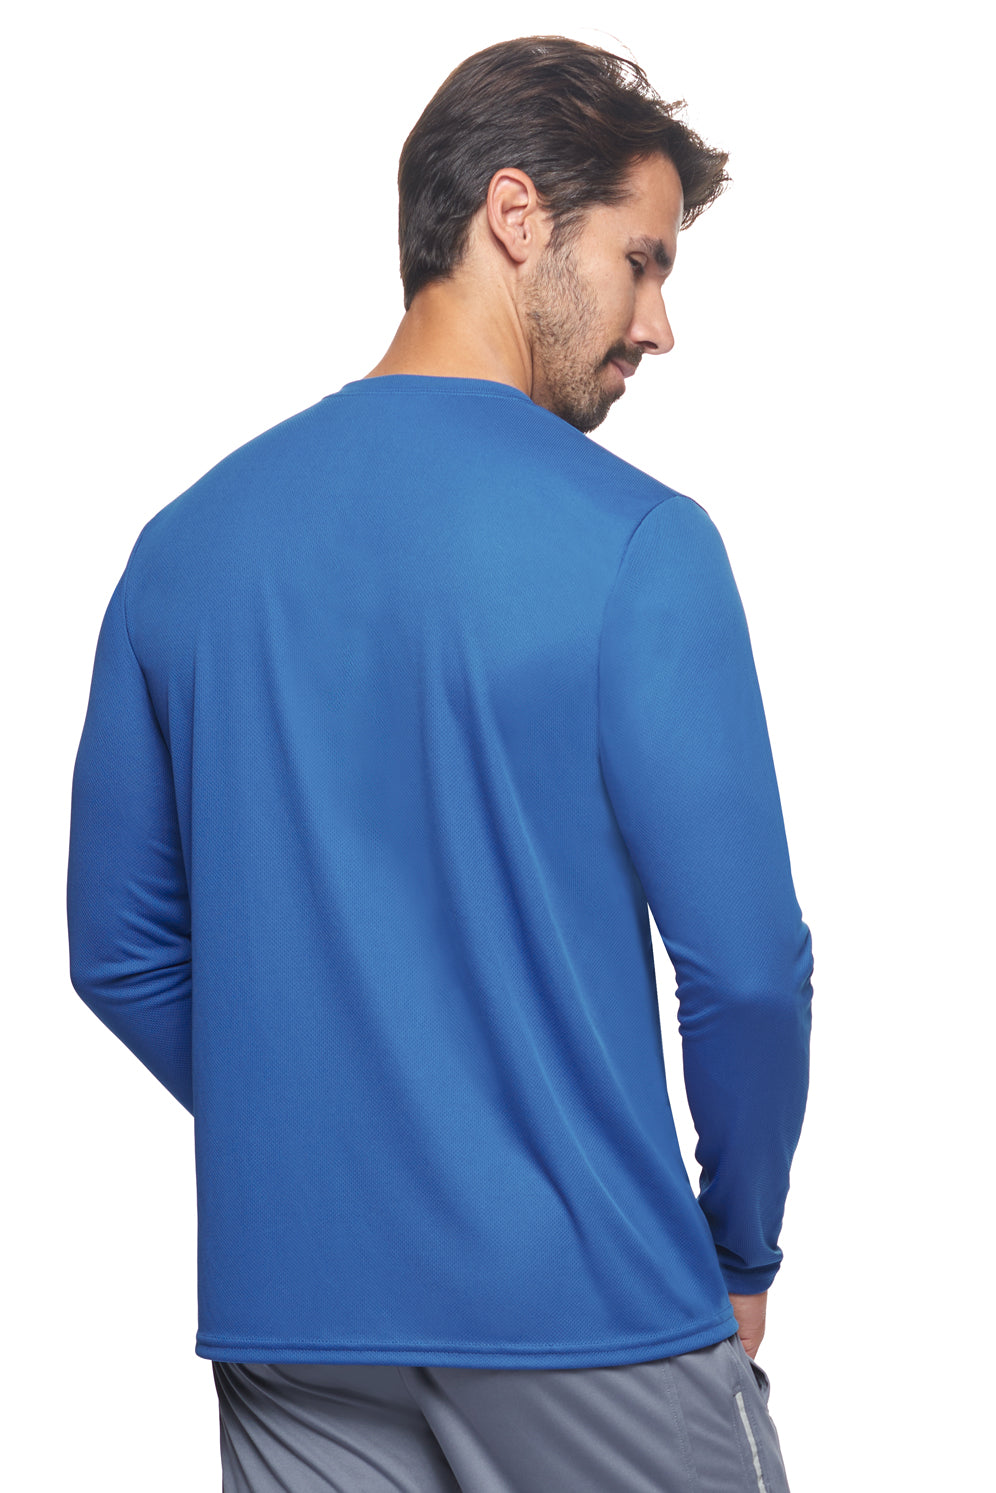 Expert Brand Wholesale Sportswear Activewear Imported Oxymesh™ Long Sleeve Tec Tee AJ901 royal blue 3#royal-blue